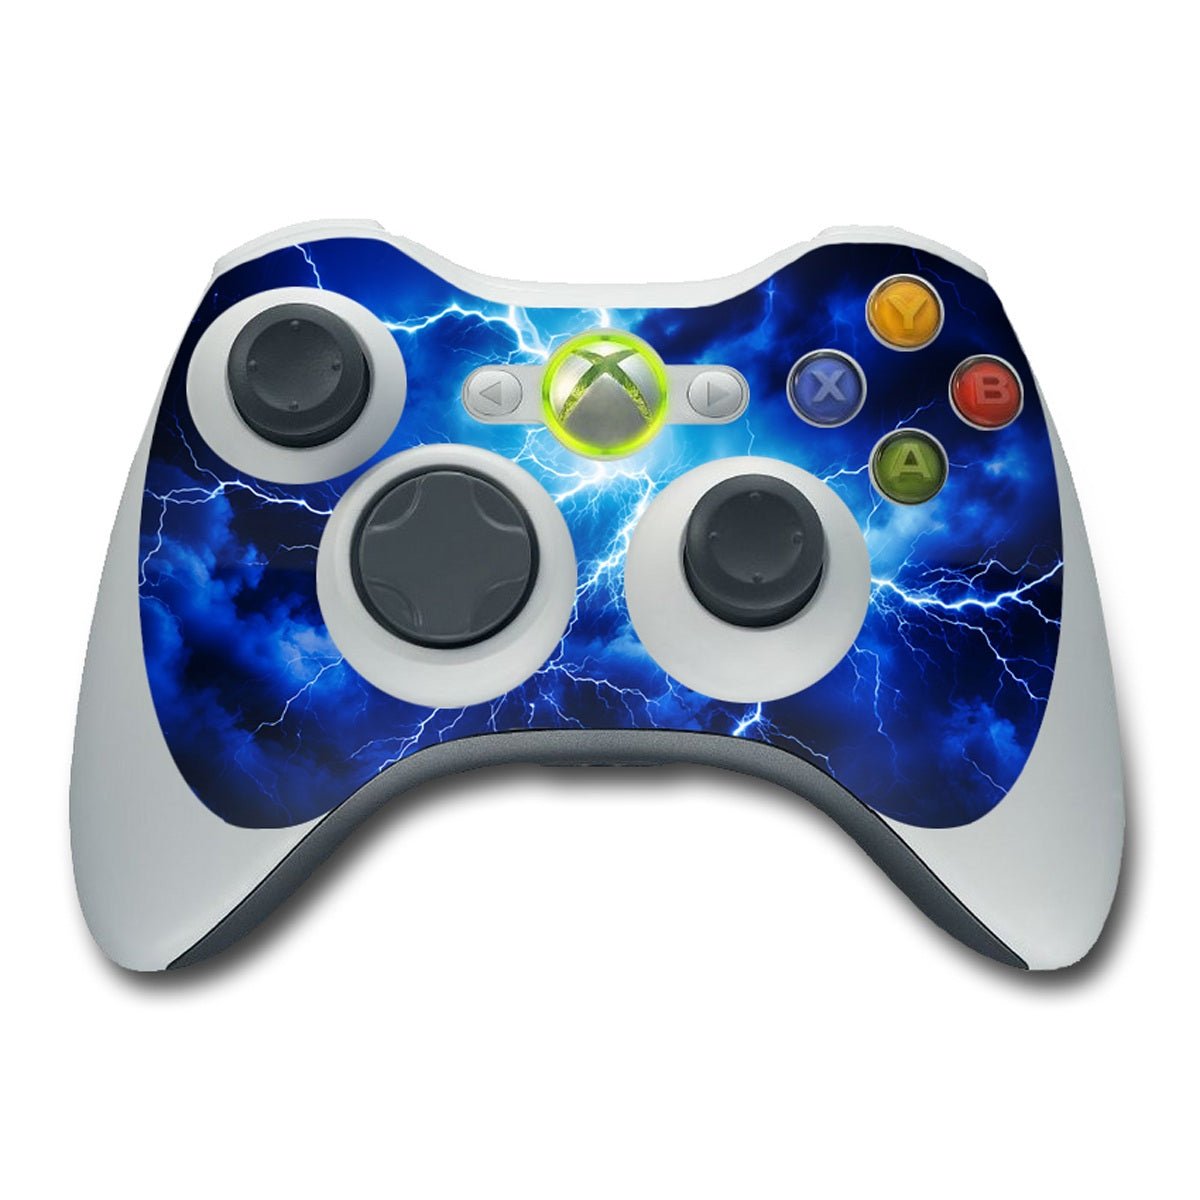 Apocalypse Blue - Microsoft Xbox 360 Controller Skin - Gaming - DecalGirl